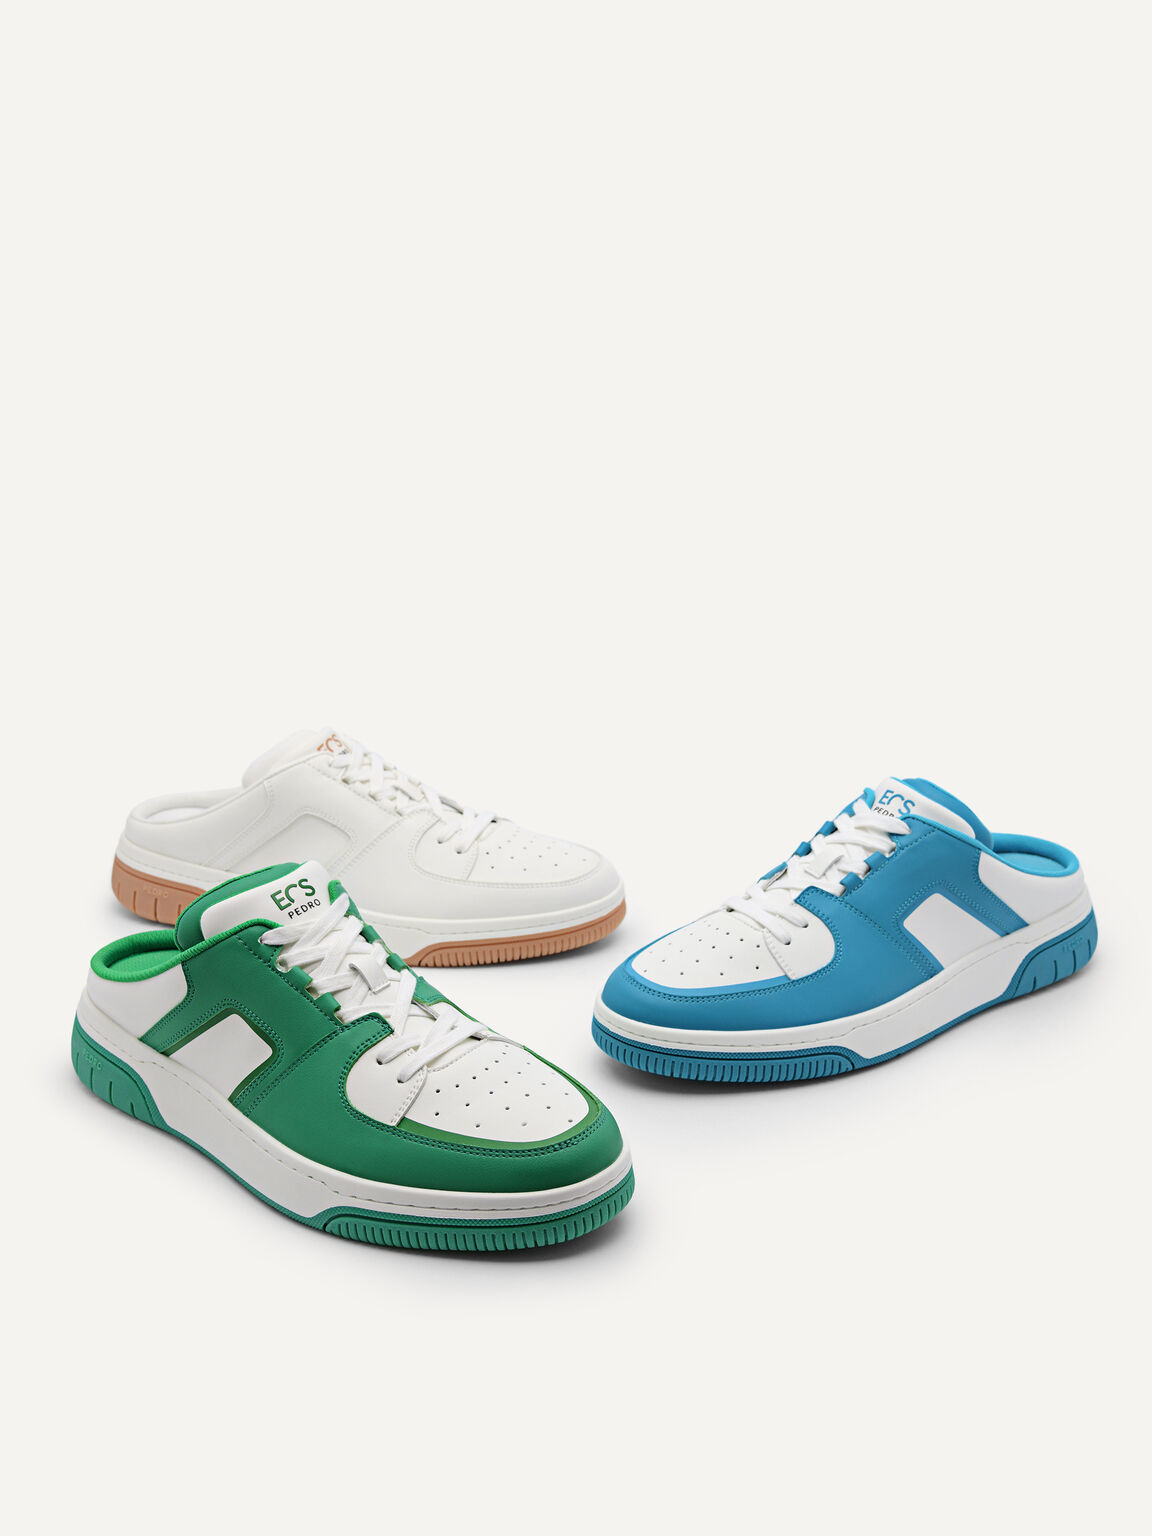 Men's EOS Slip-On Sneakers, Green